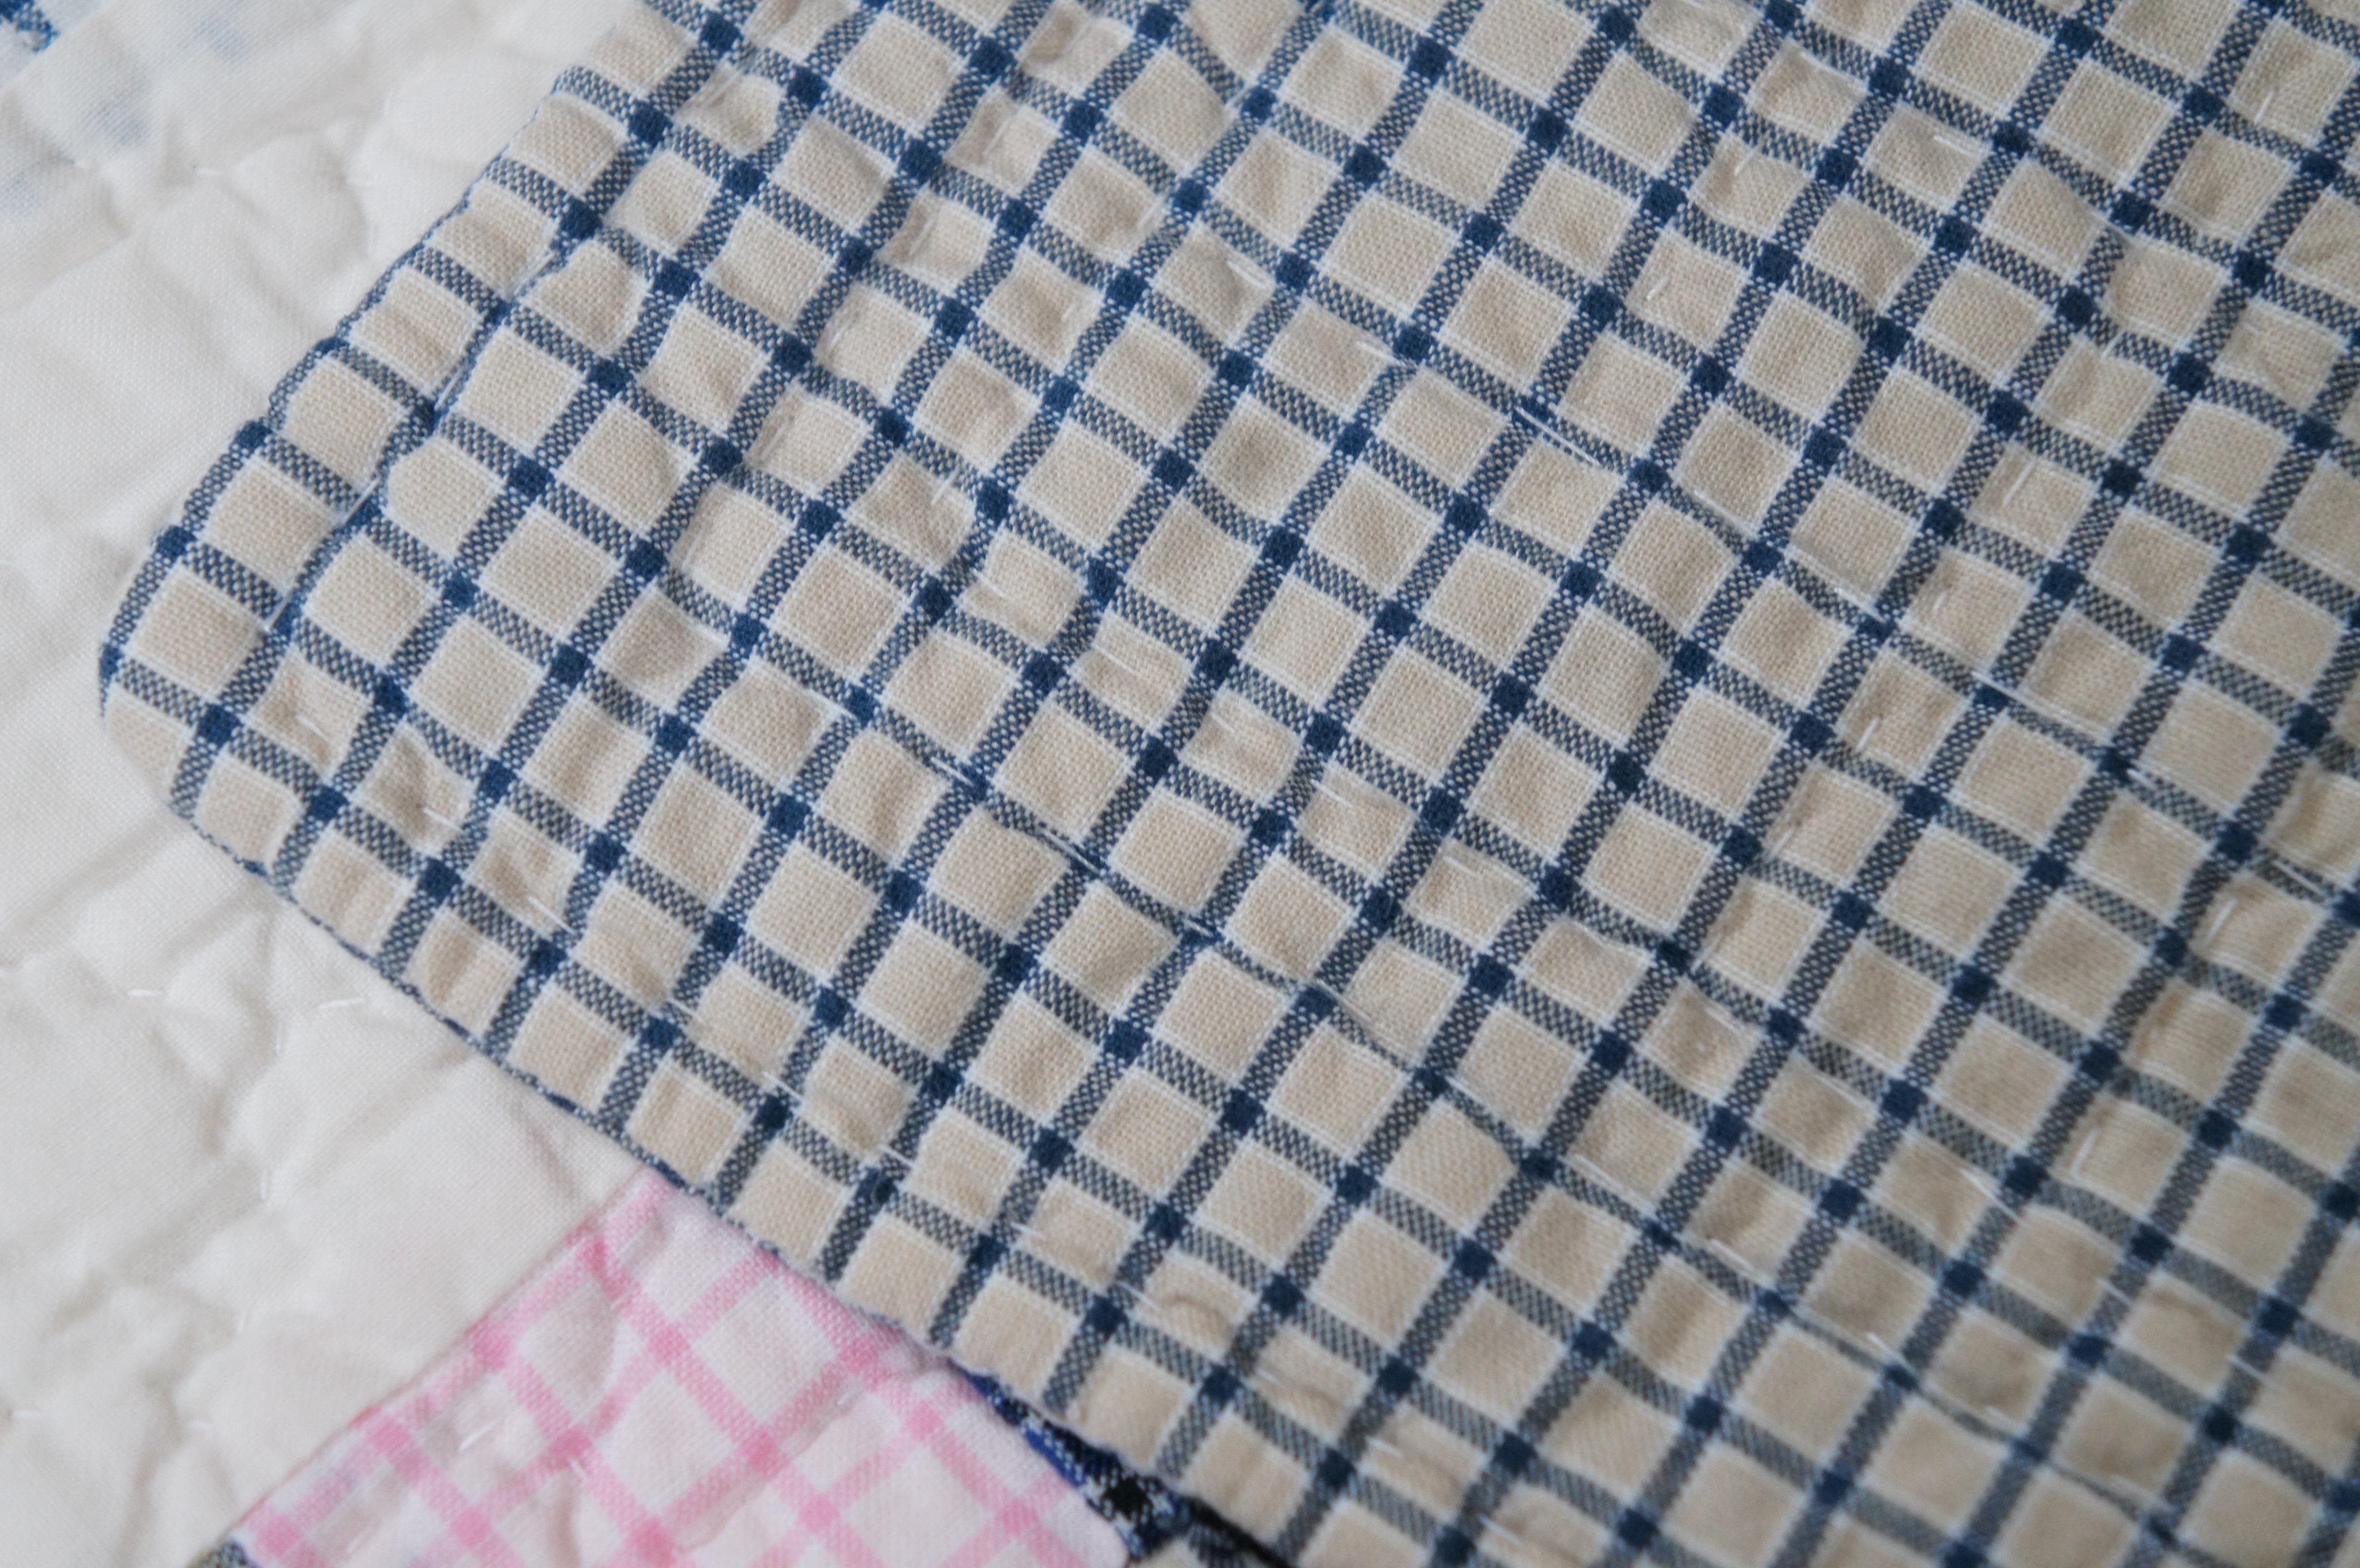 Antique Folk Art Stitched Geometric Patchwork Quilt Blanket Gingham Check For Sale 2